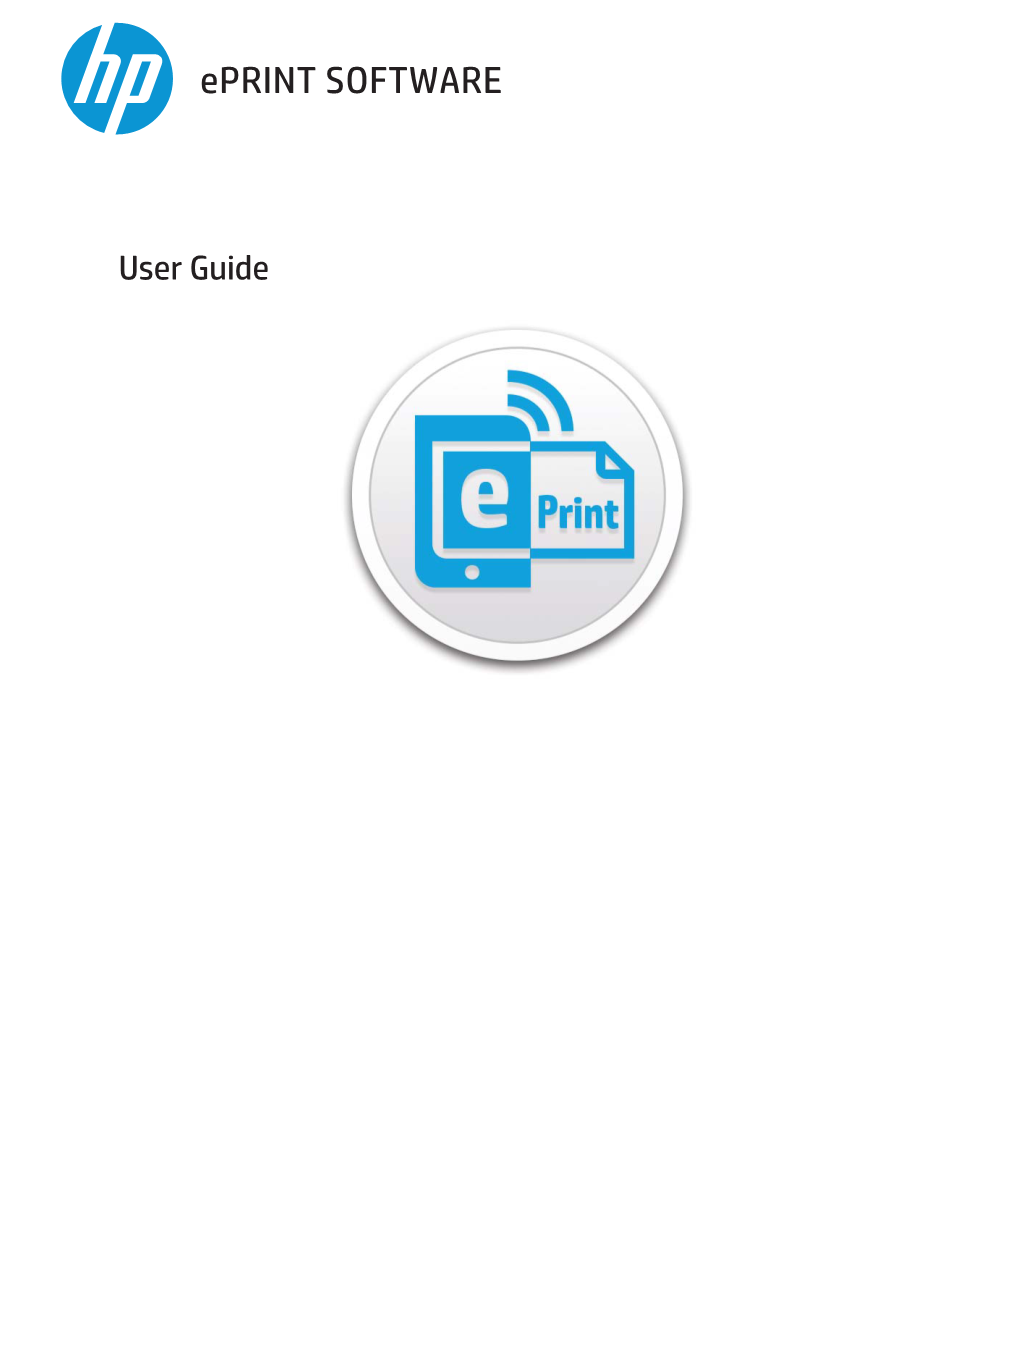 HP Eprint Software (Mac) User Guide